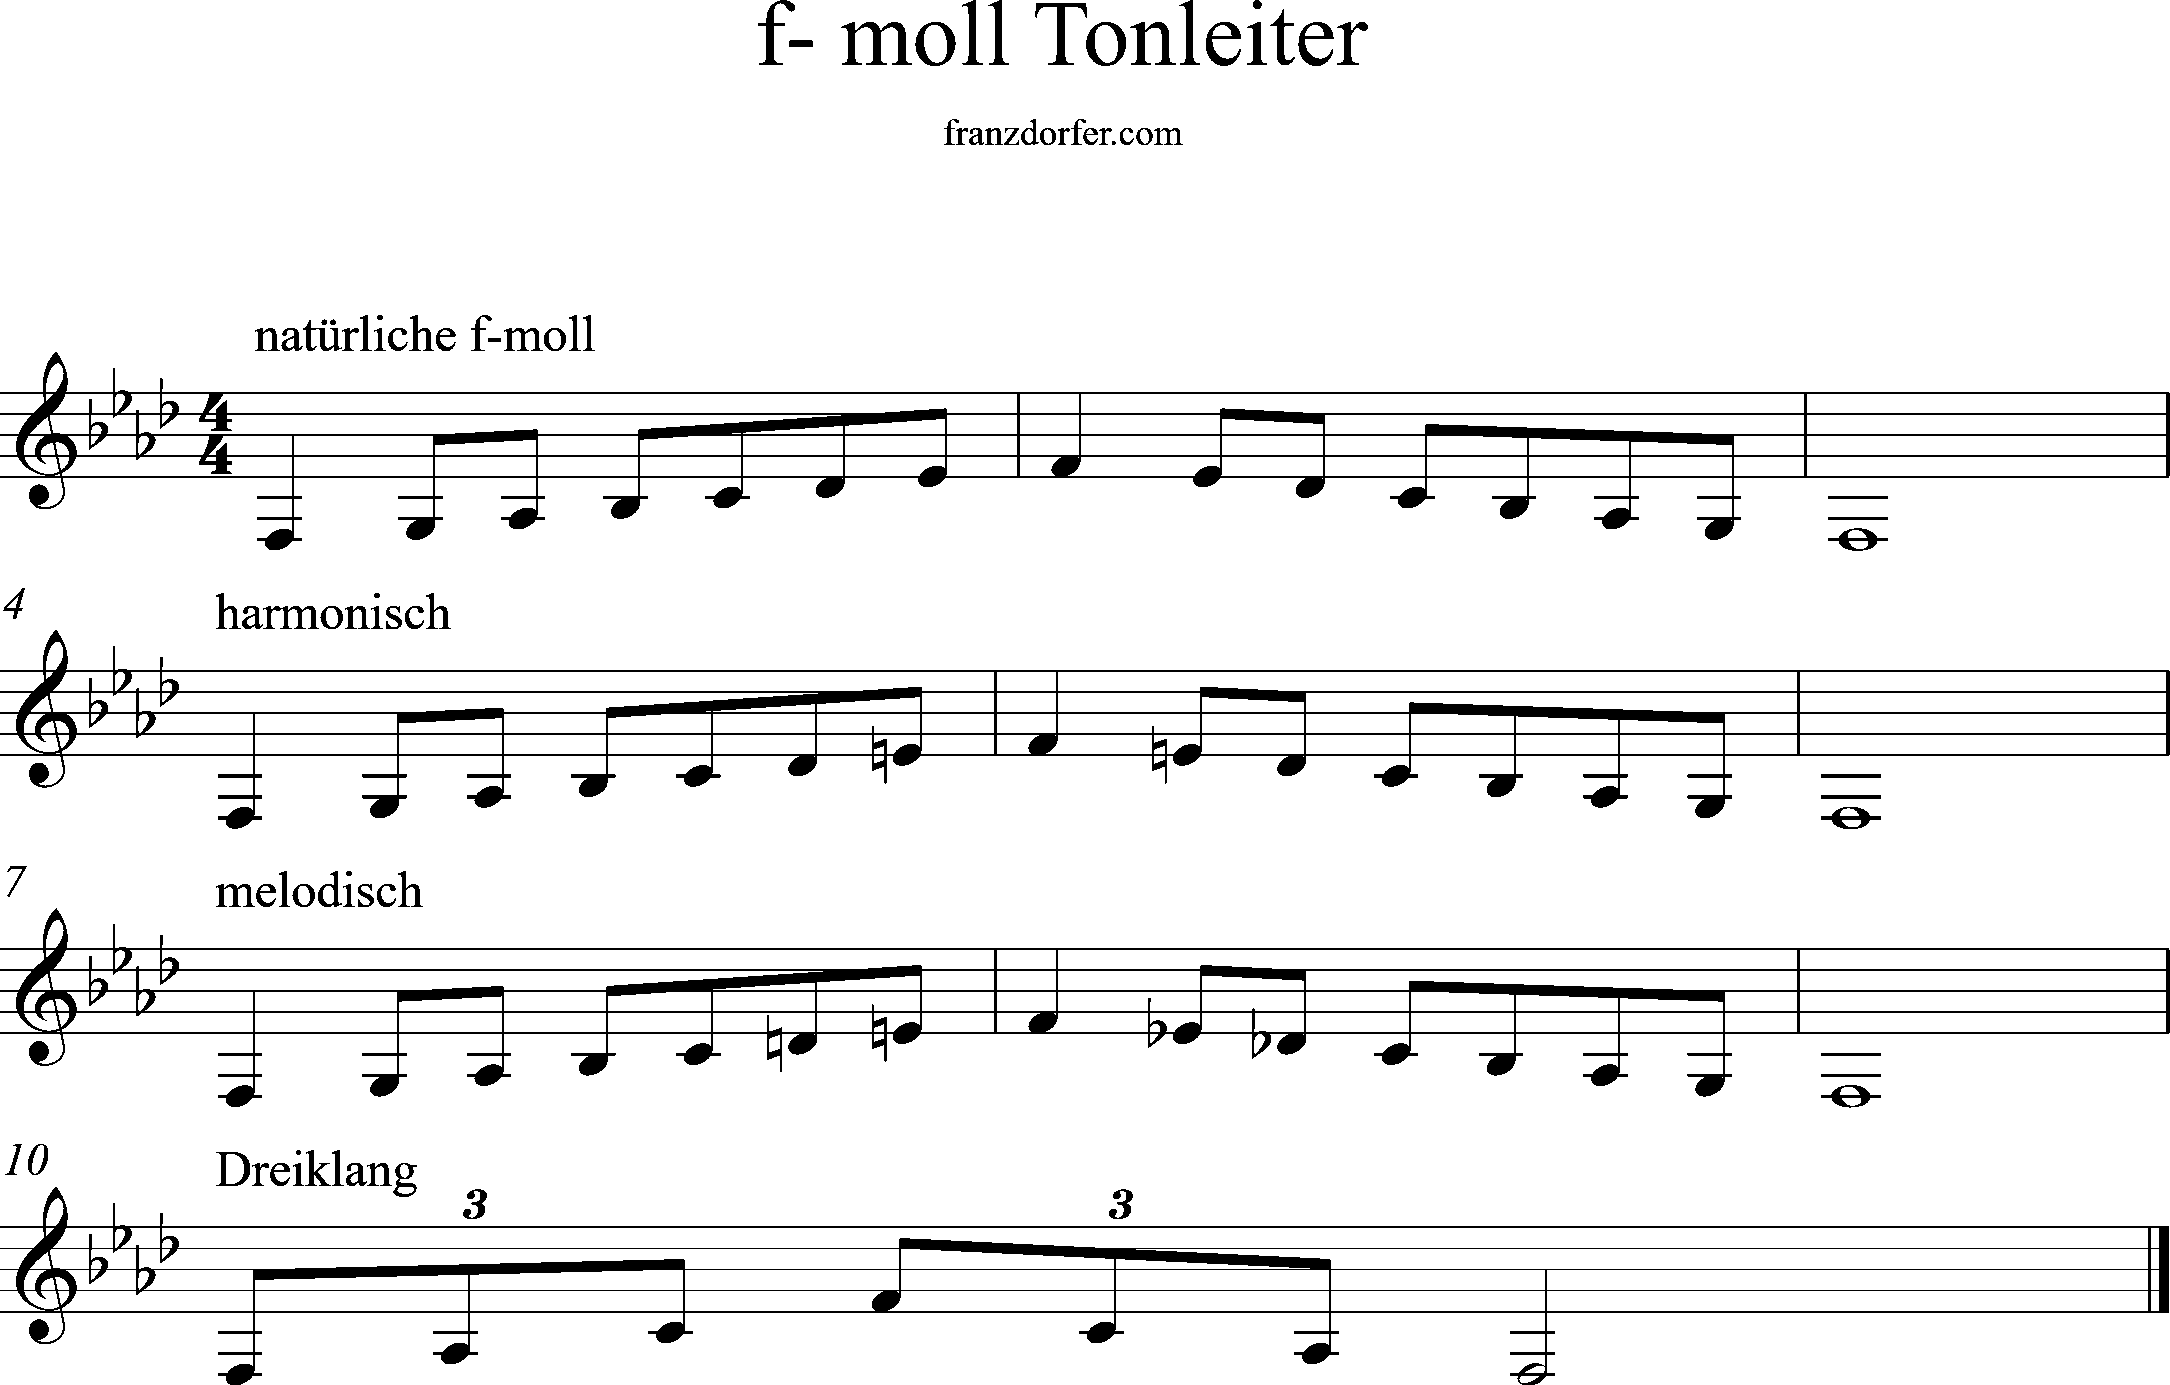 f-minor scale, treble clef, lower octave